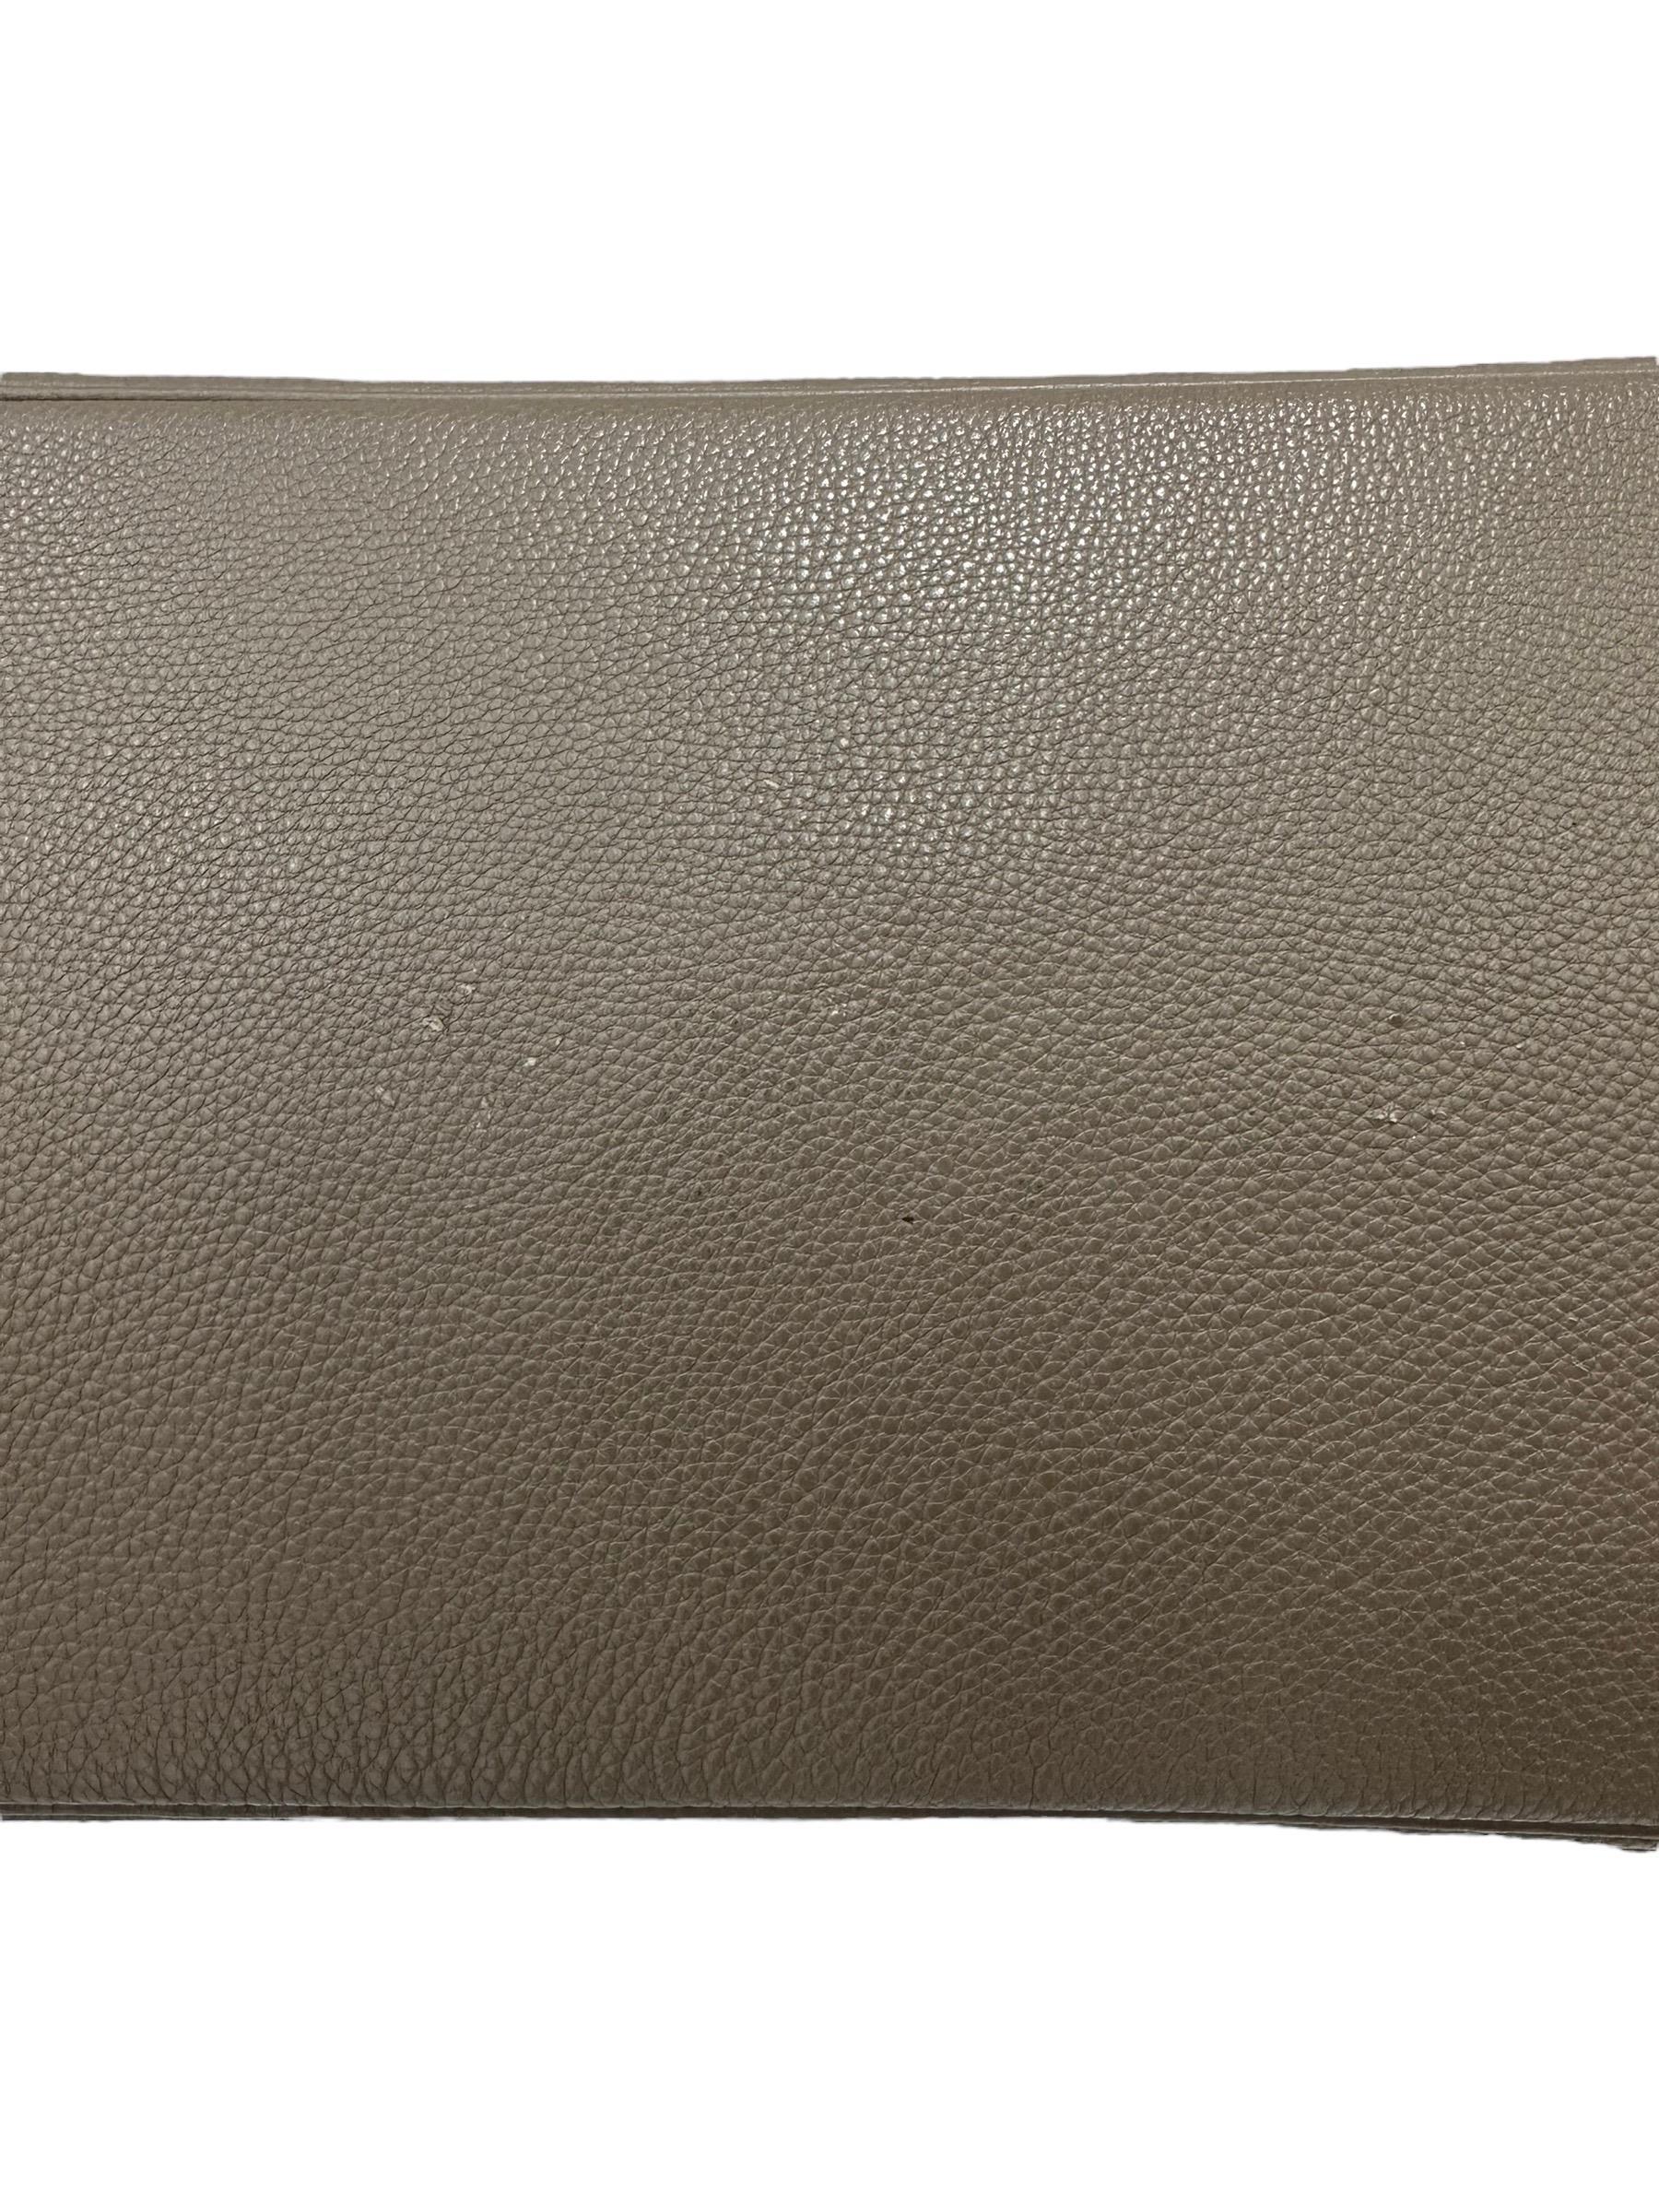 2008 Hermès Birkin 35 Togo Leather Toundra Top Handle Bag en vente 5